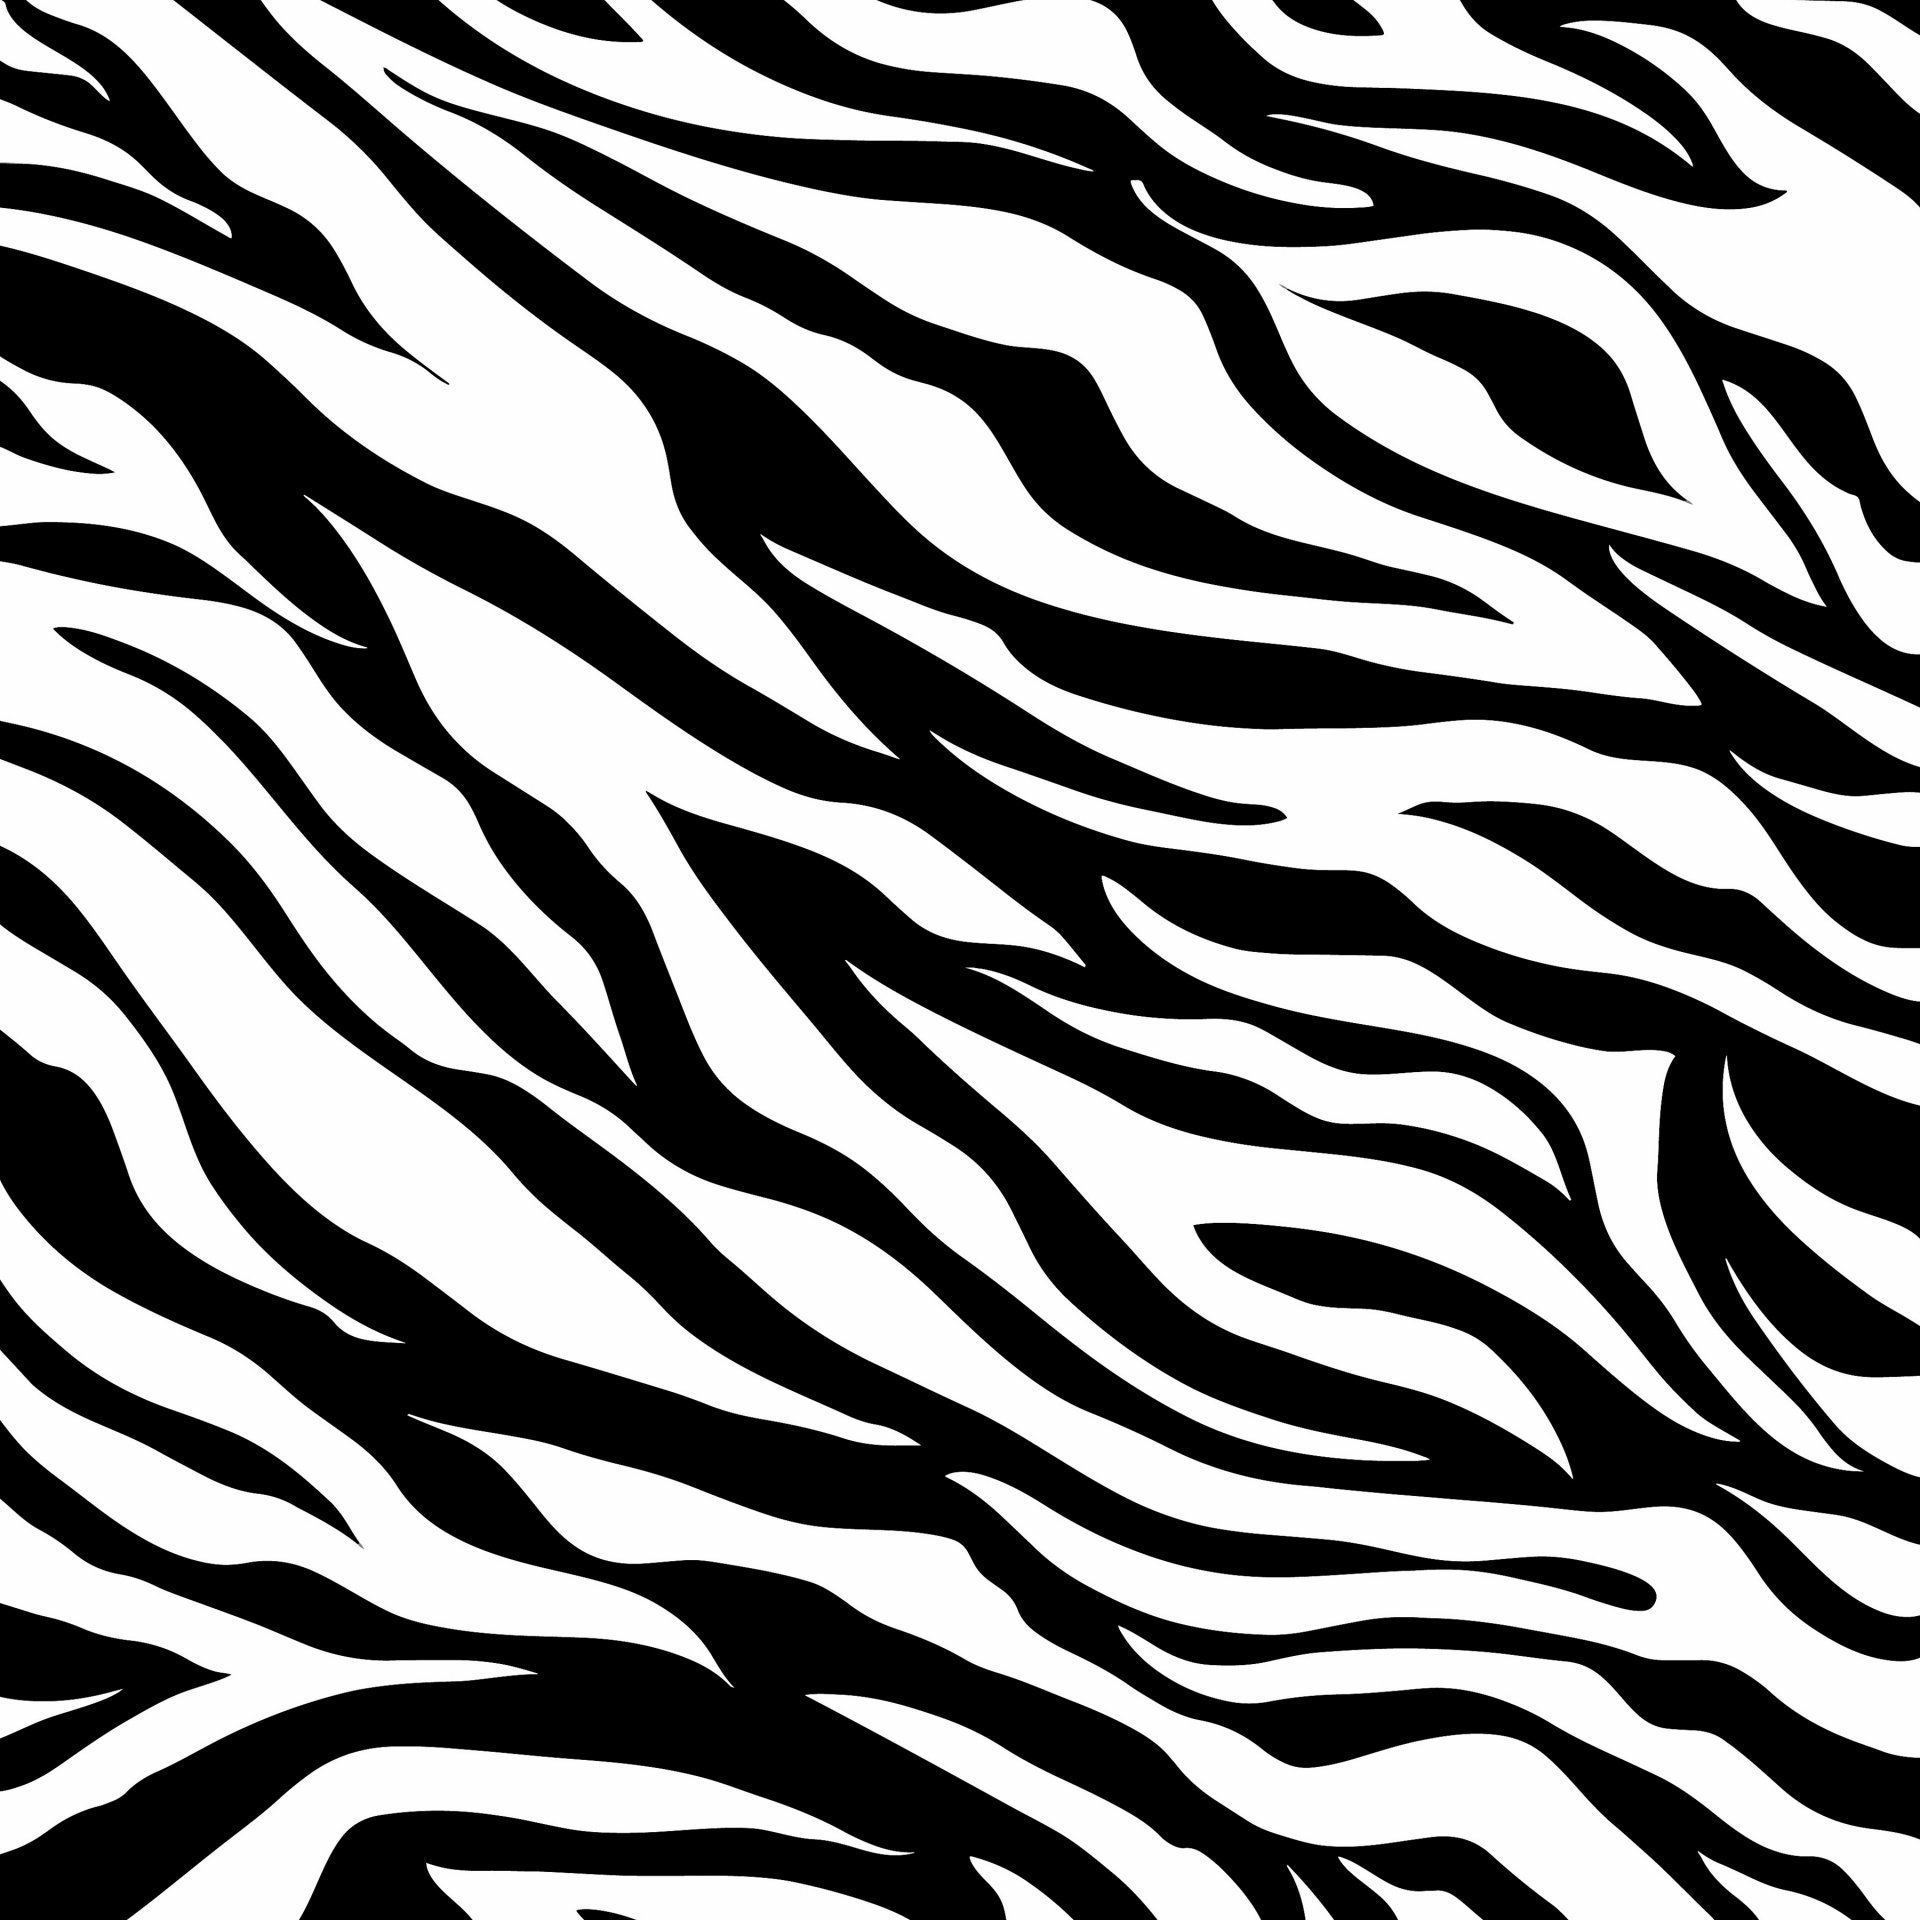 Zebra Skin pattern